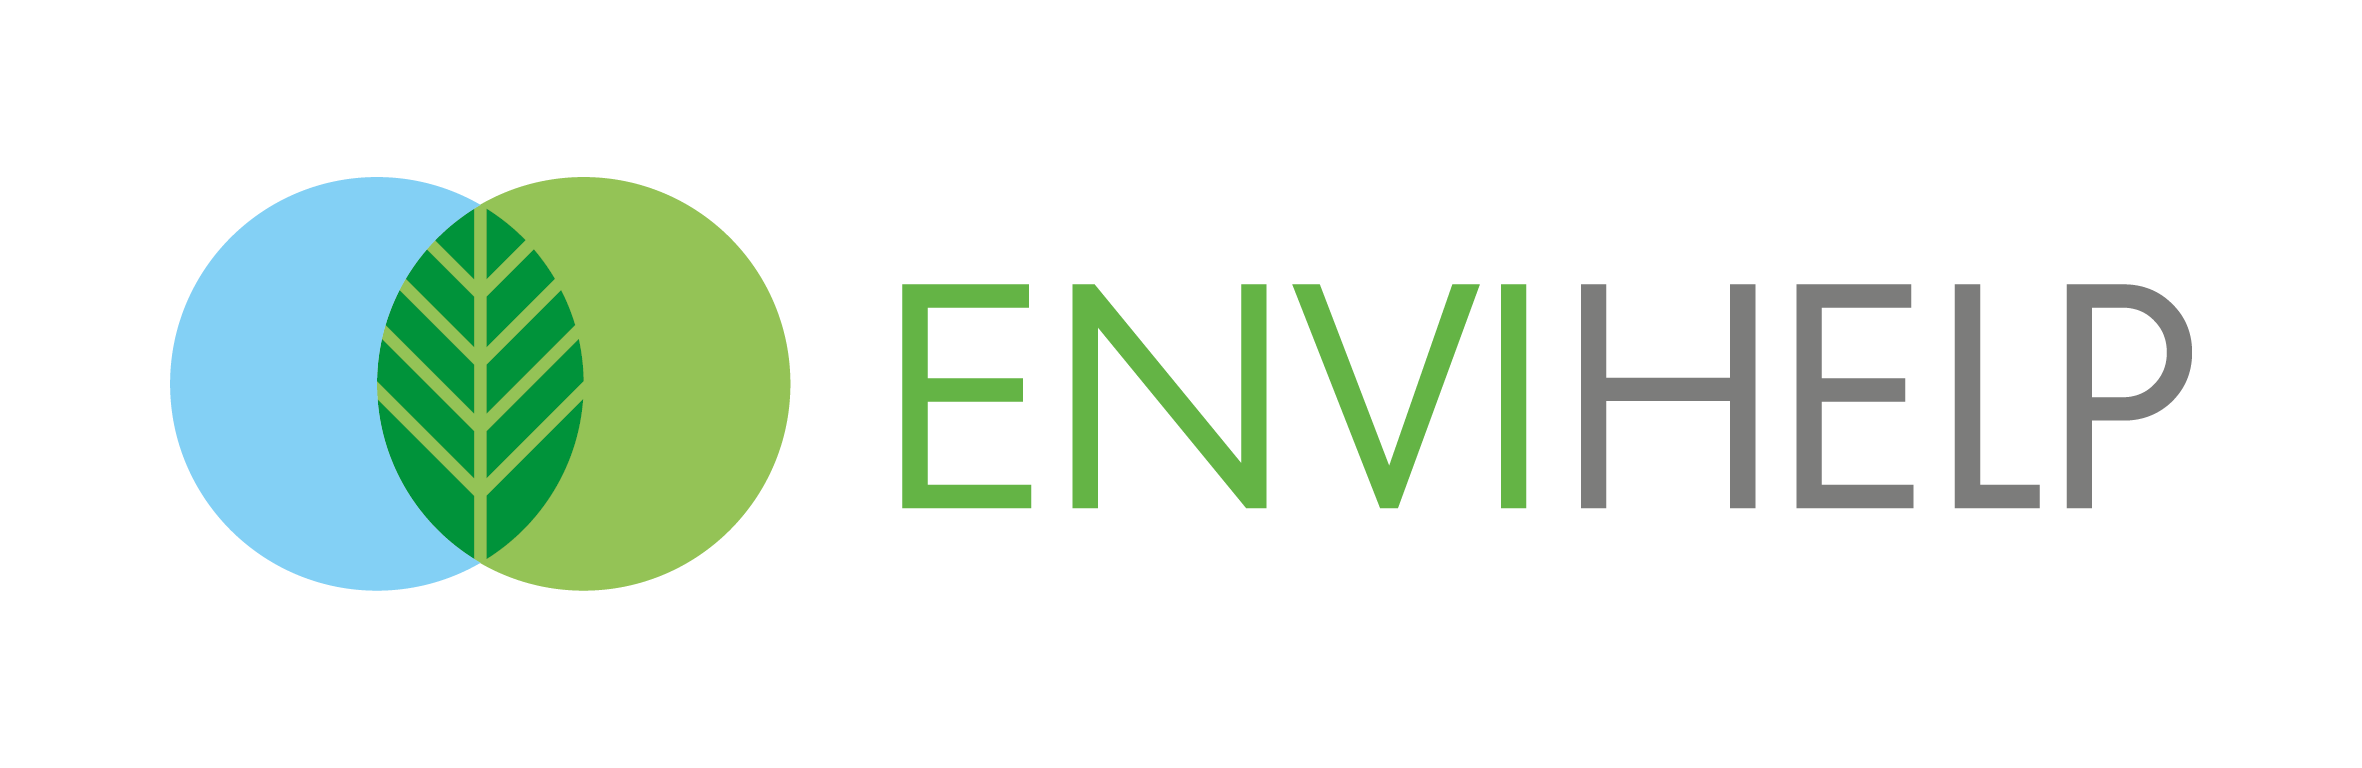 ENVIHELP_logo